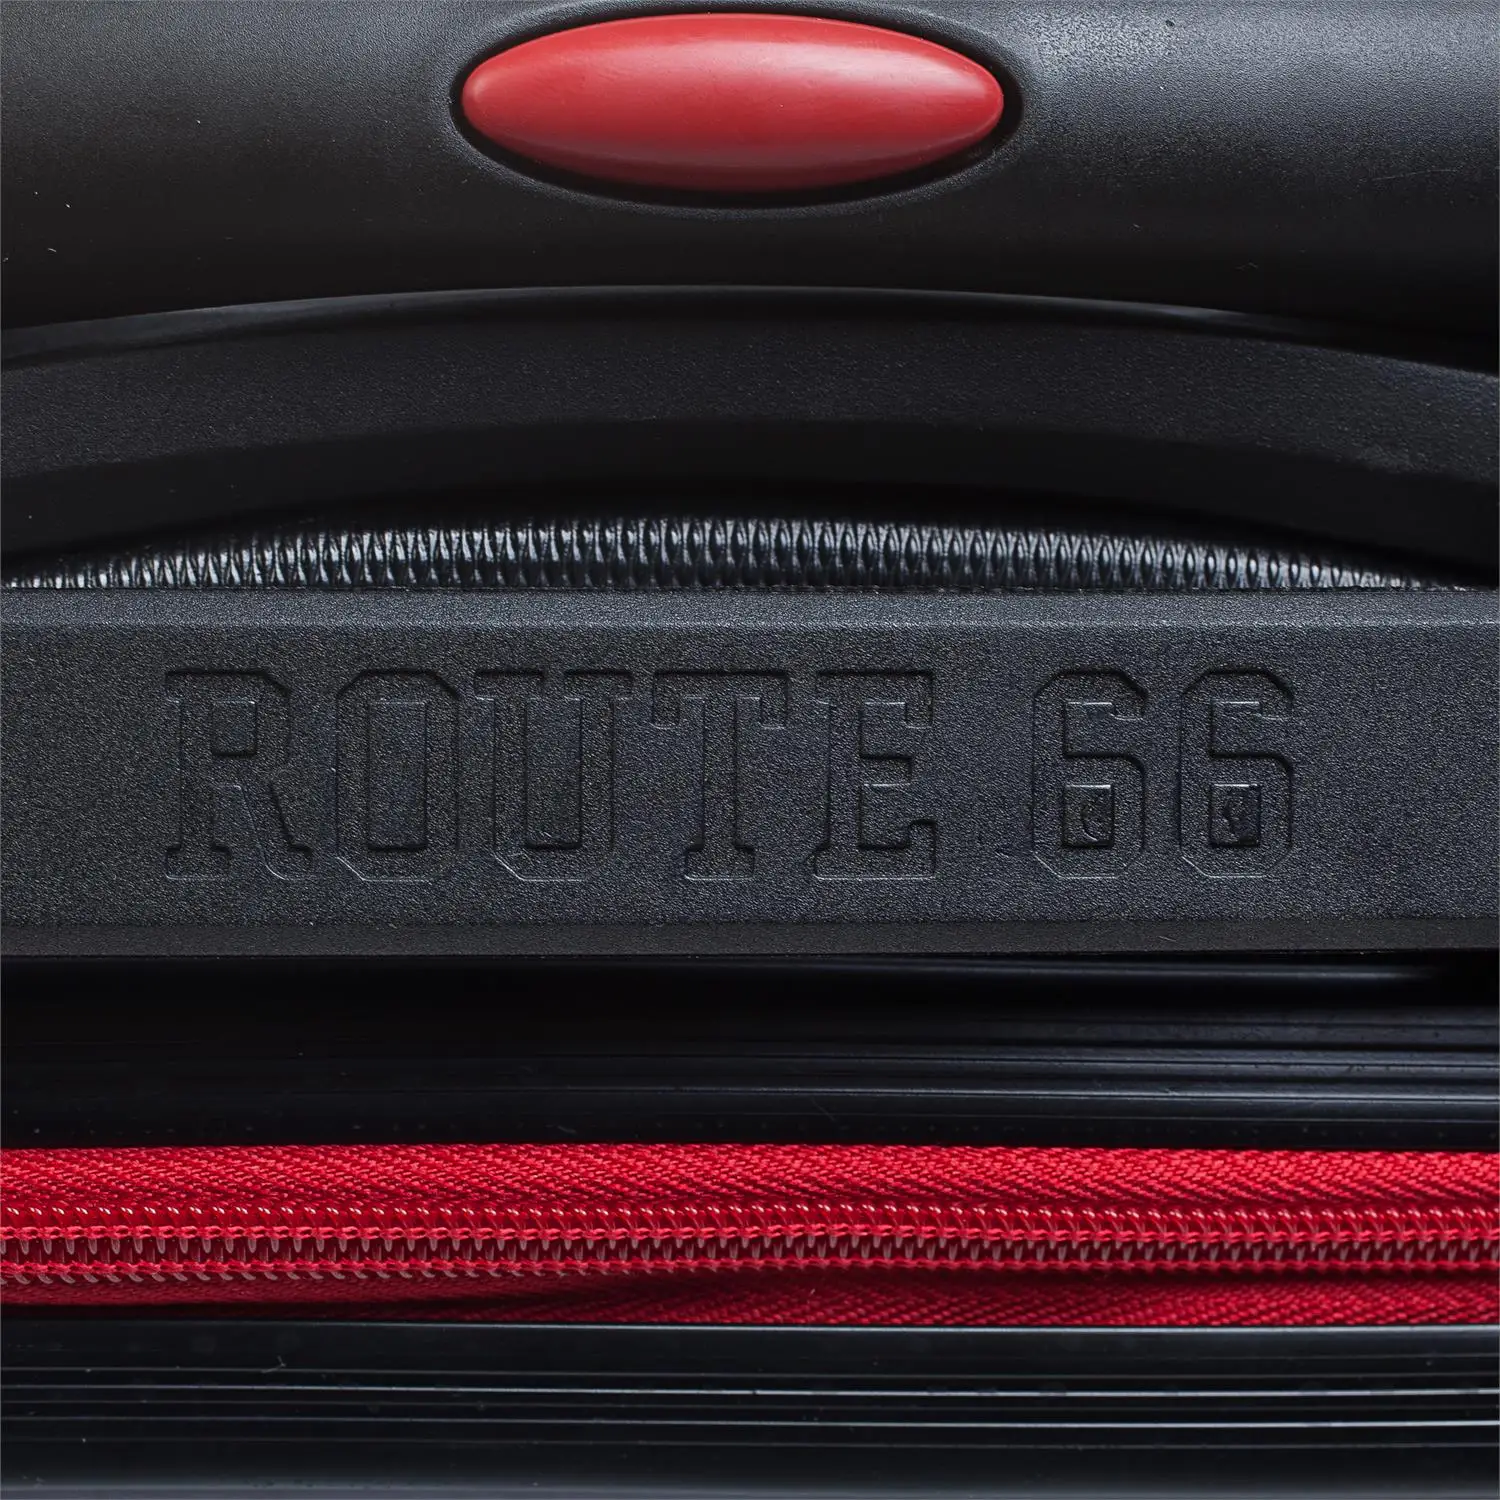 Route 66 модель Tennessee набор 2 чемодана тележка 50/60 см кабина и средний Поликарбонат PC Печать майка